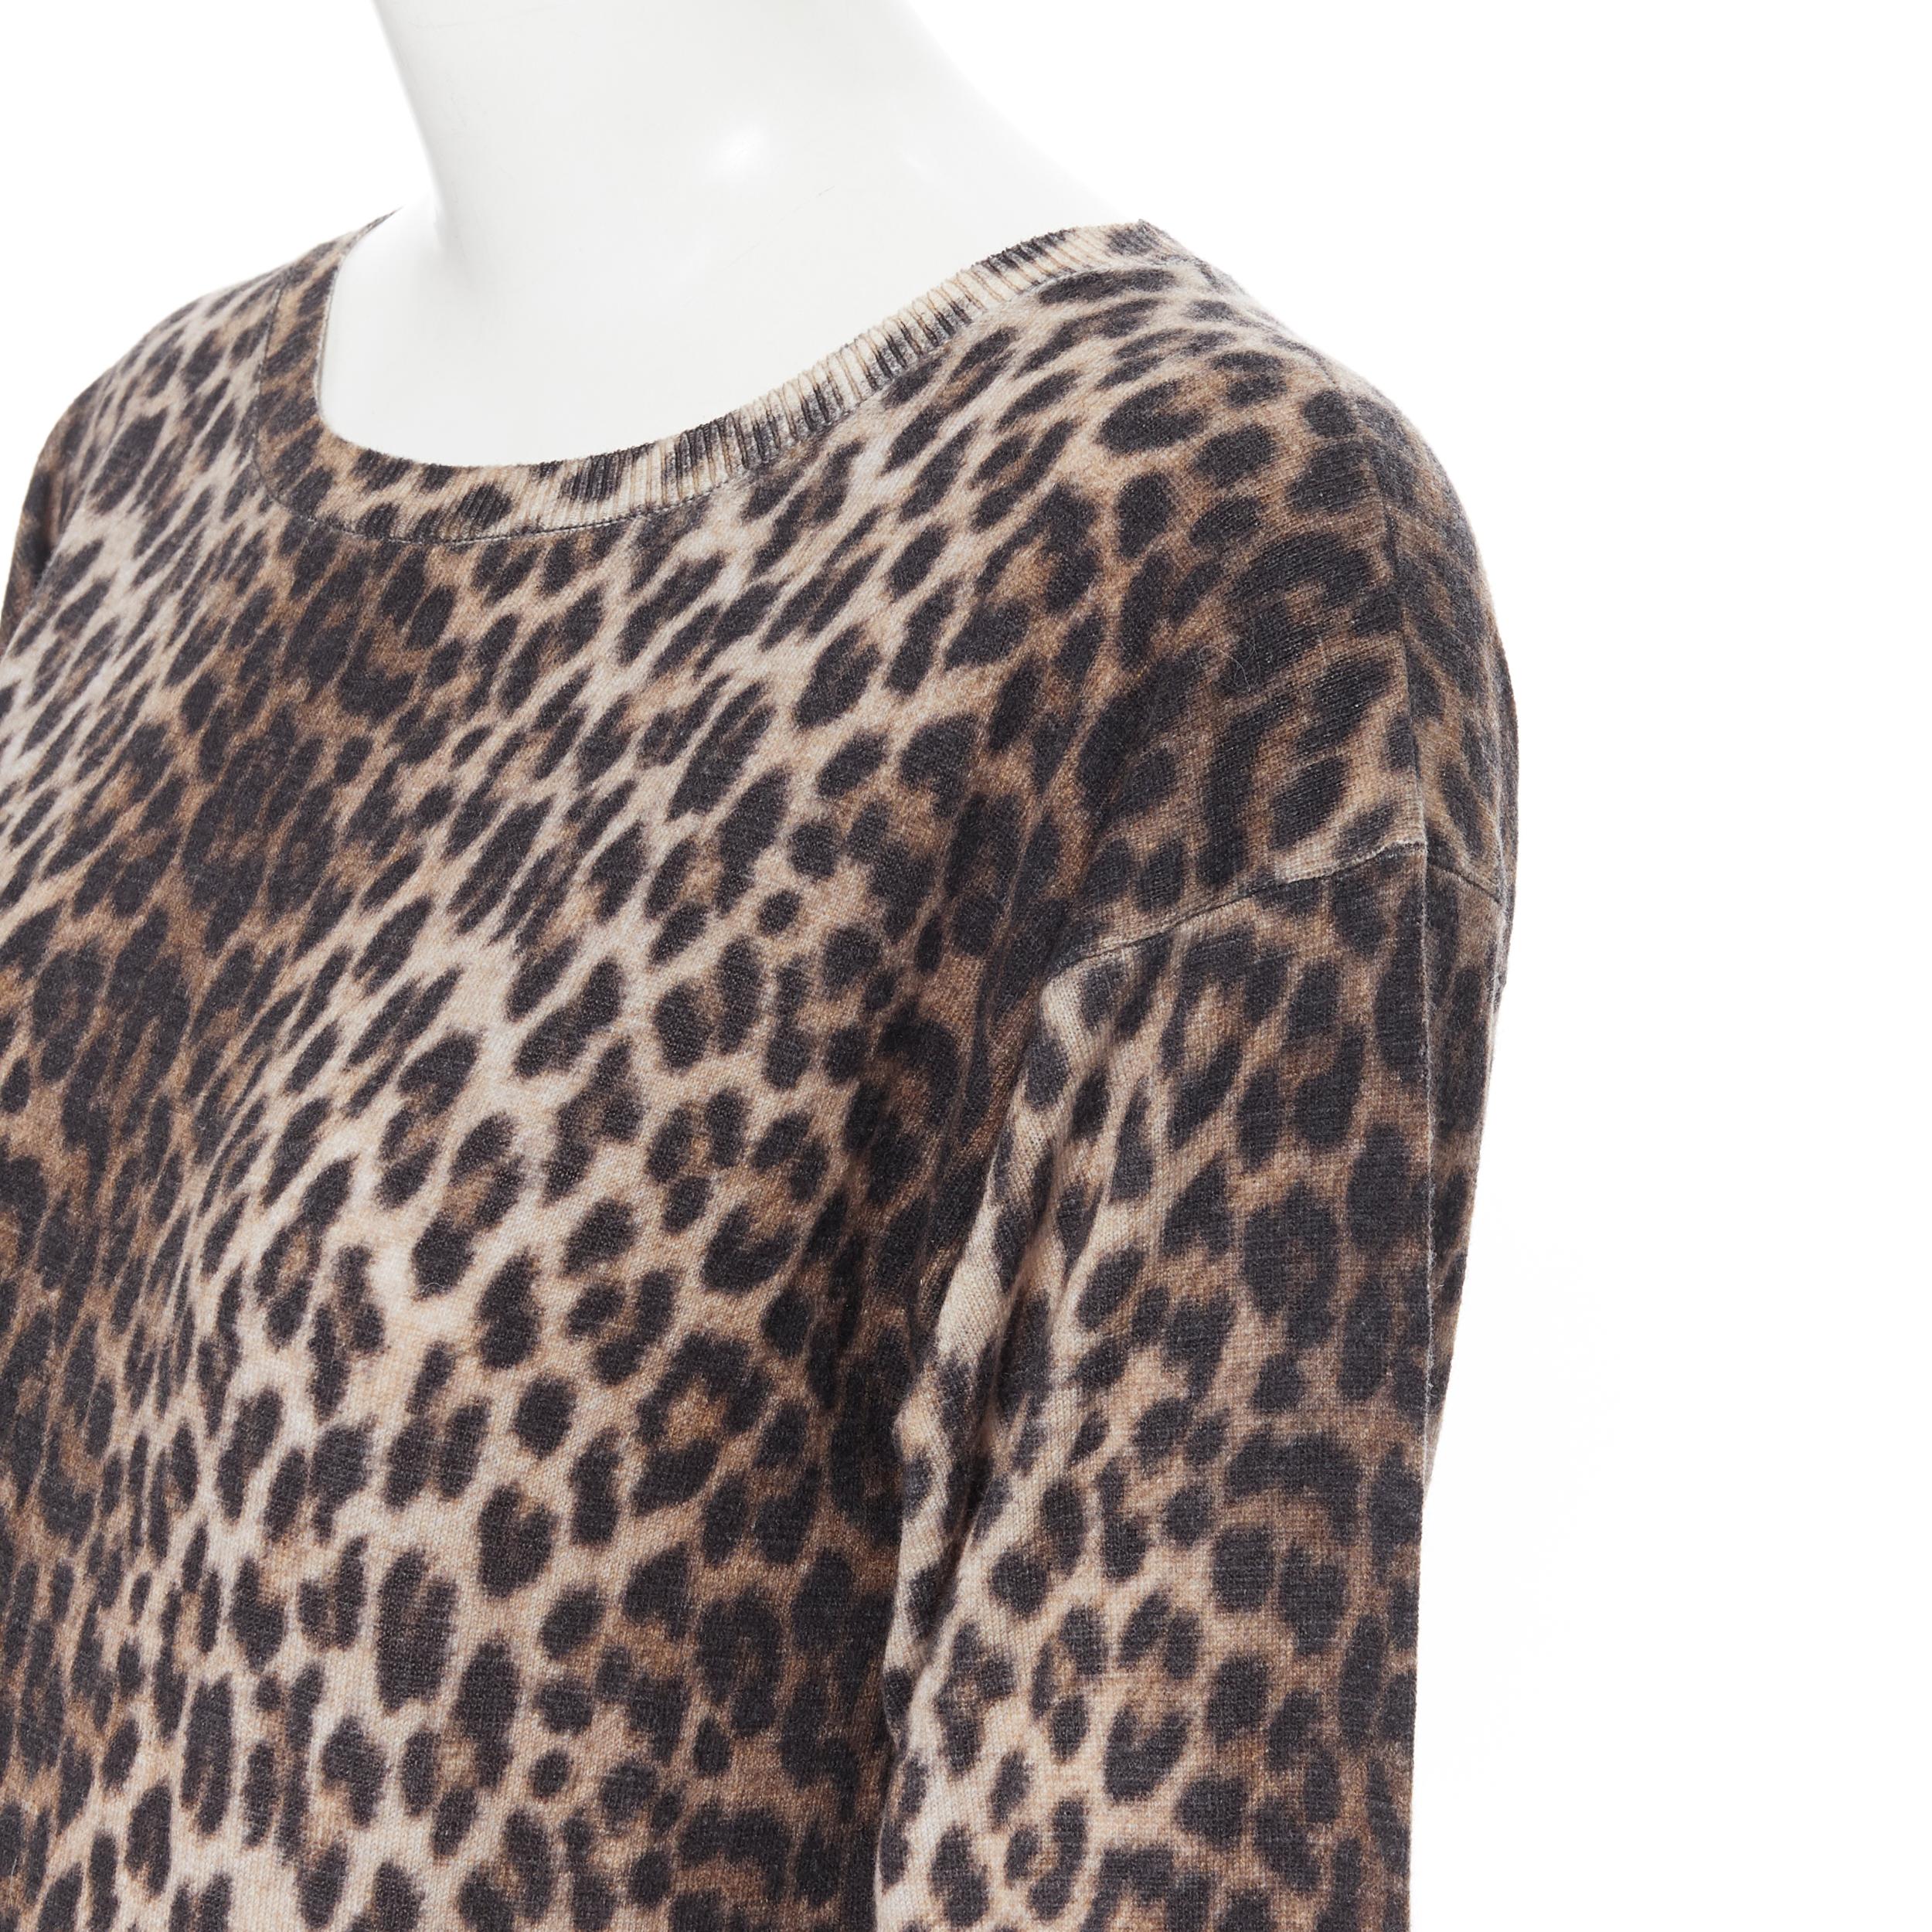 LANVIN ELBAZ 2010 100% wool brown leopard spot 3/4 sleeve knit sweater dress XS
Brand: Lanvin
Designer: Alber Elbaz
Collection: Fall 2010
Model Name / Style: Sweater dress
Material: Wool
Color: Brown
Pattern: Leopard
Extra Detail: Short sleeve